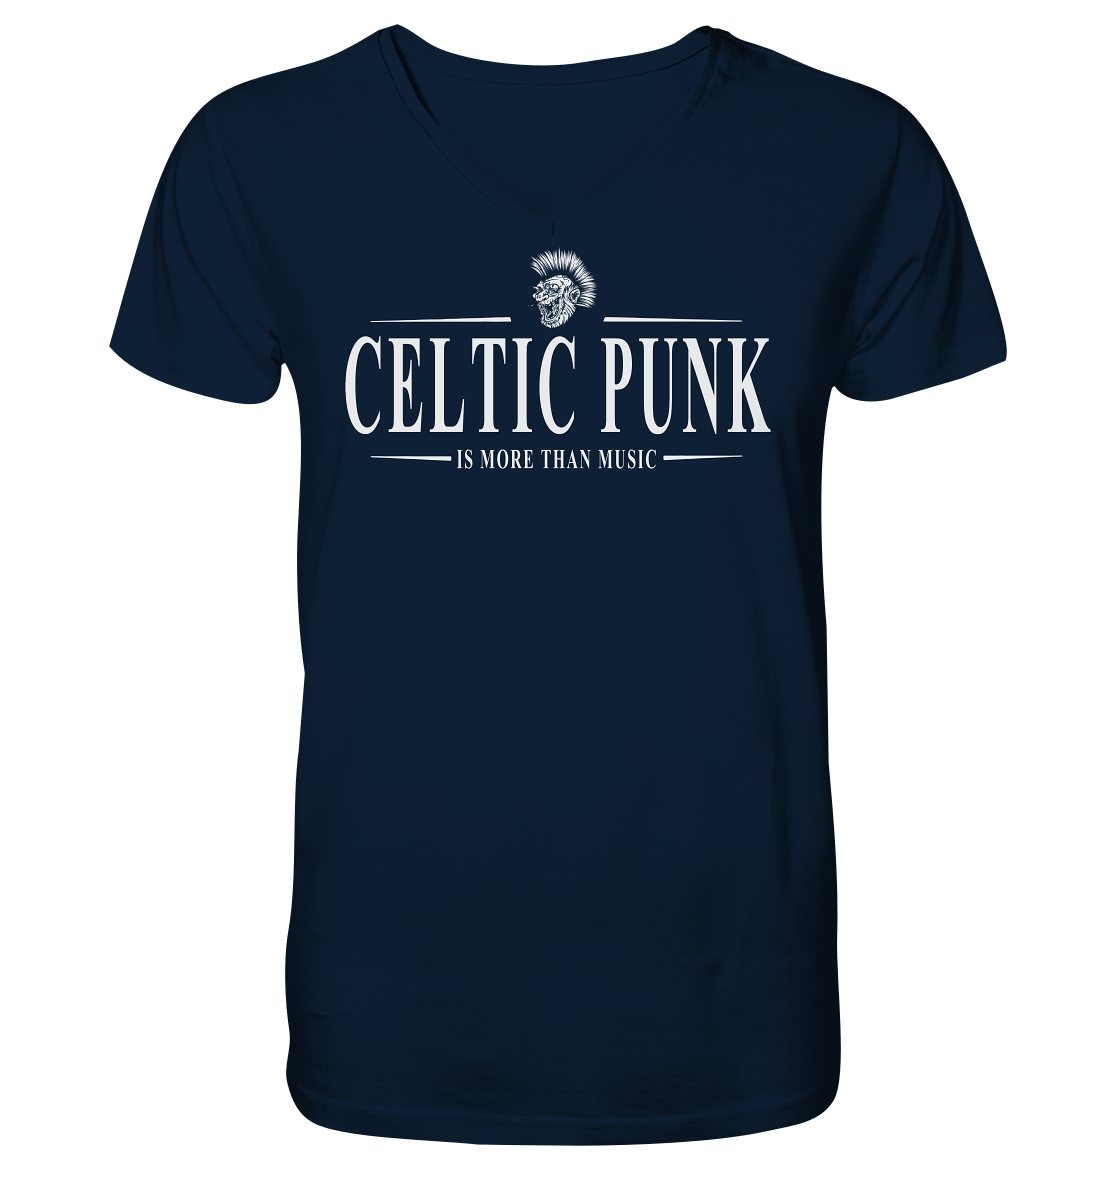 Celtic Punk "Is More Than Music" - V-Neck Shirt